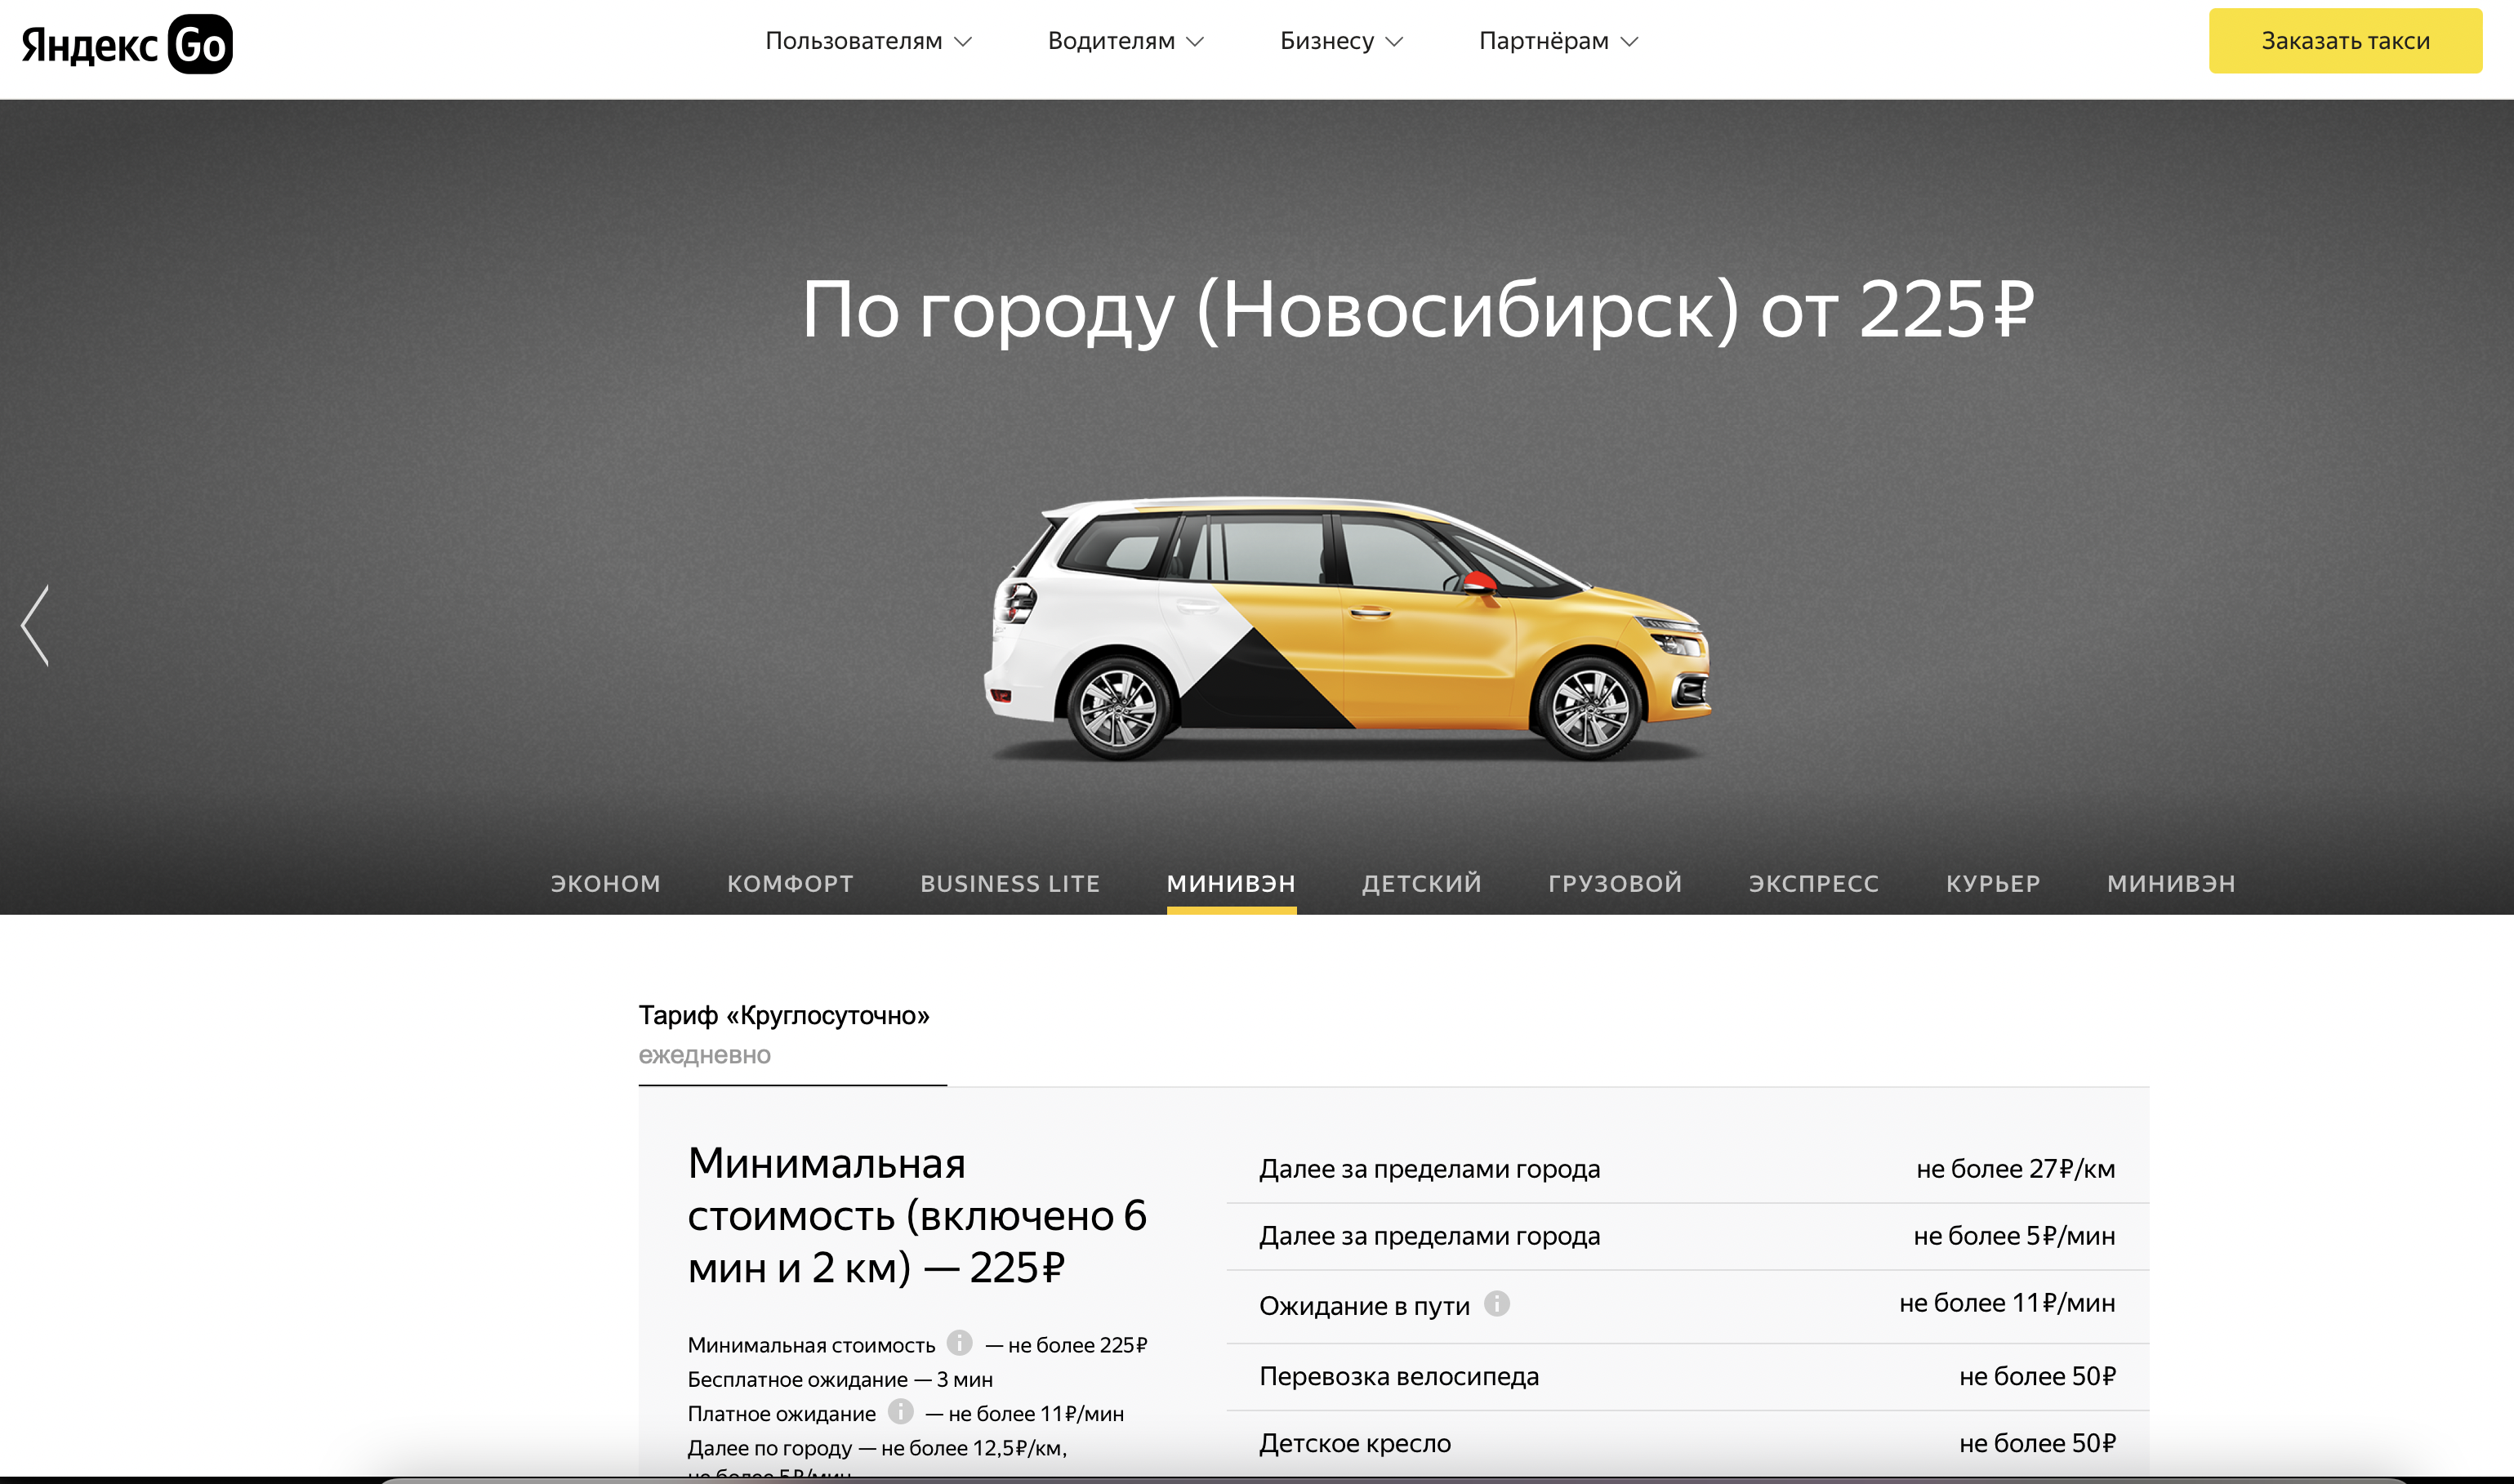 Такси новосибирск аэропорт цена. Такси Новосибирск заказать.